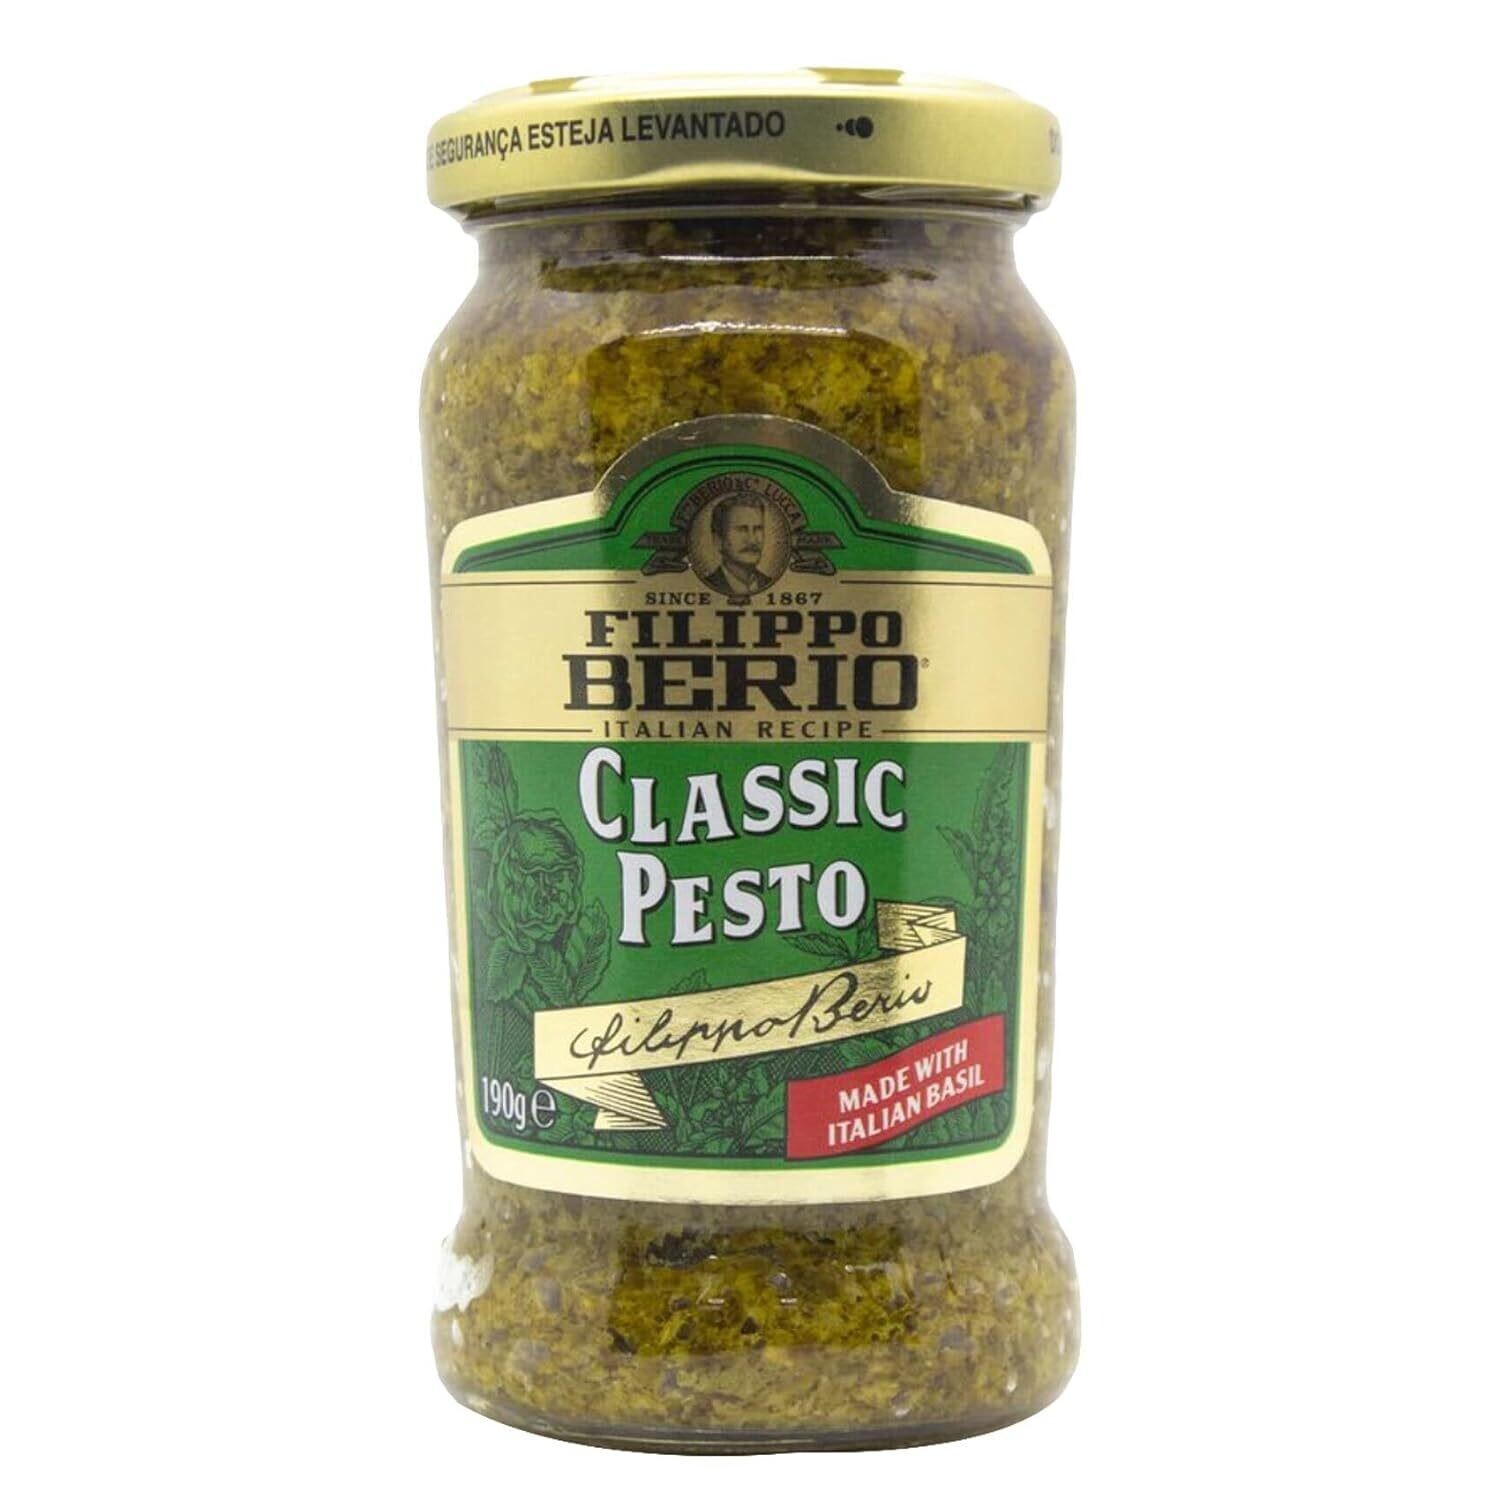 Filippo Berio Classic Pesto | Imported